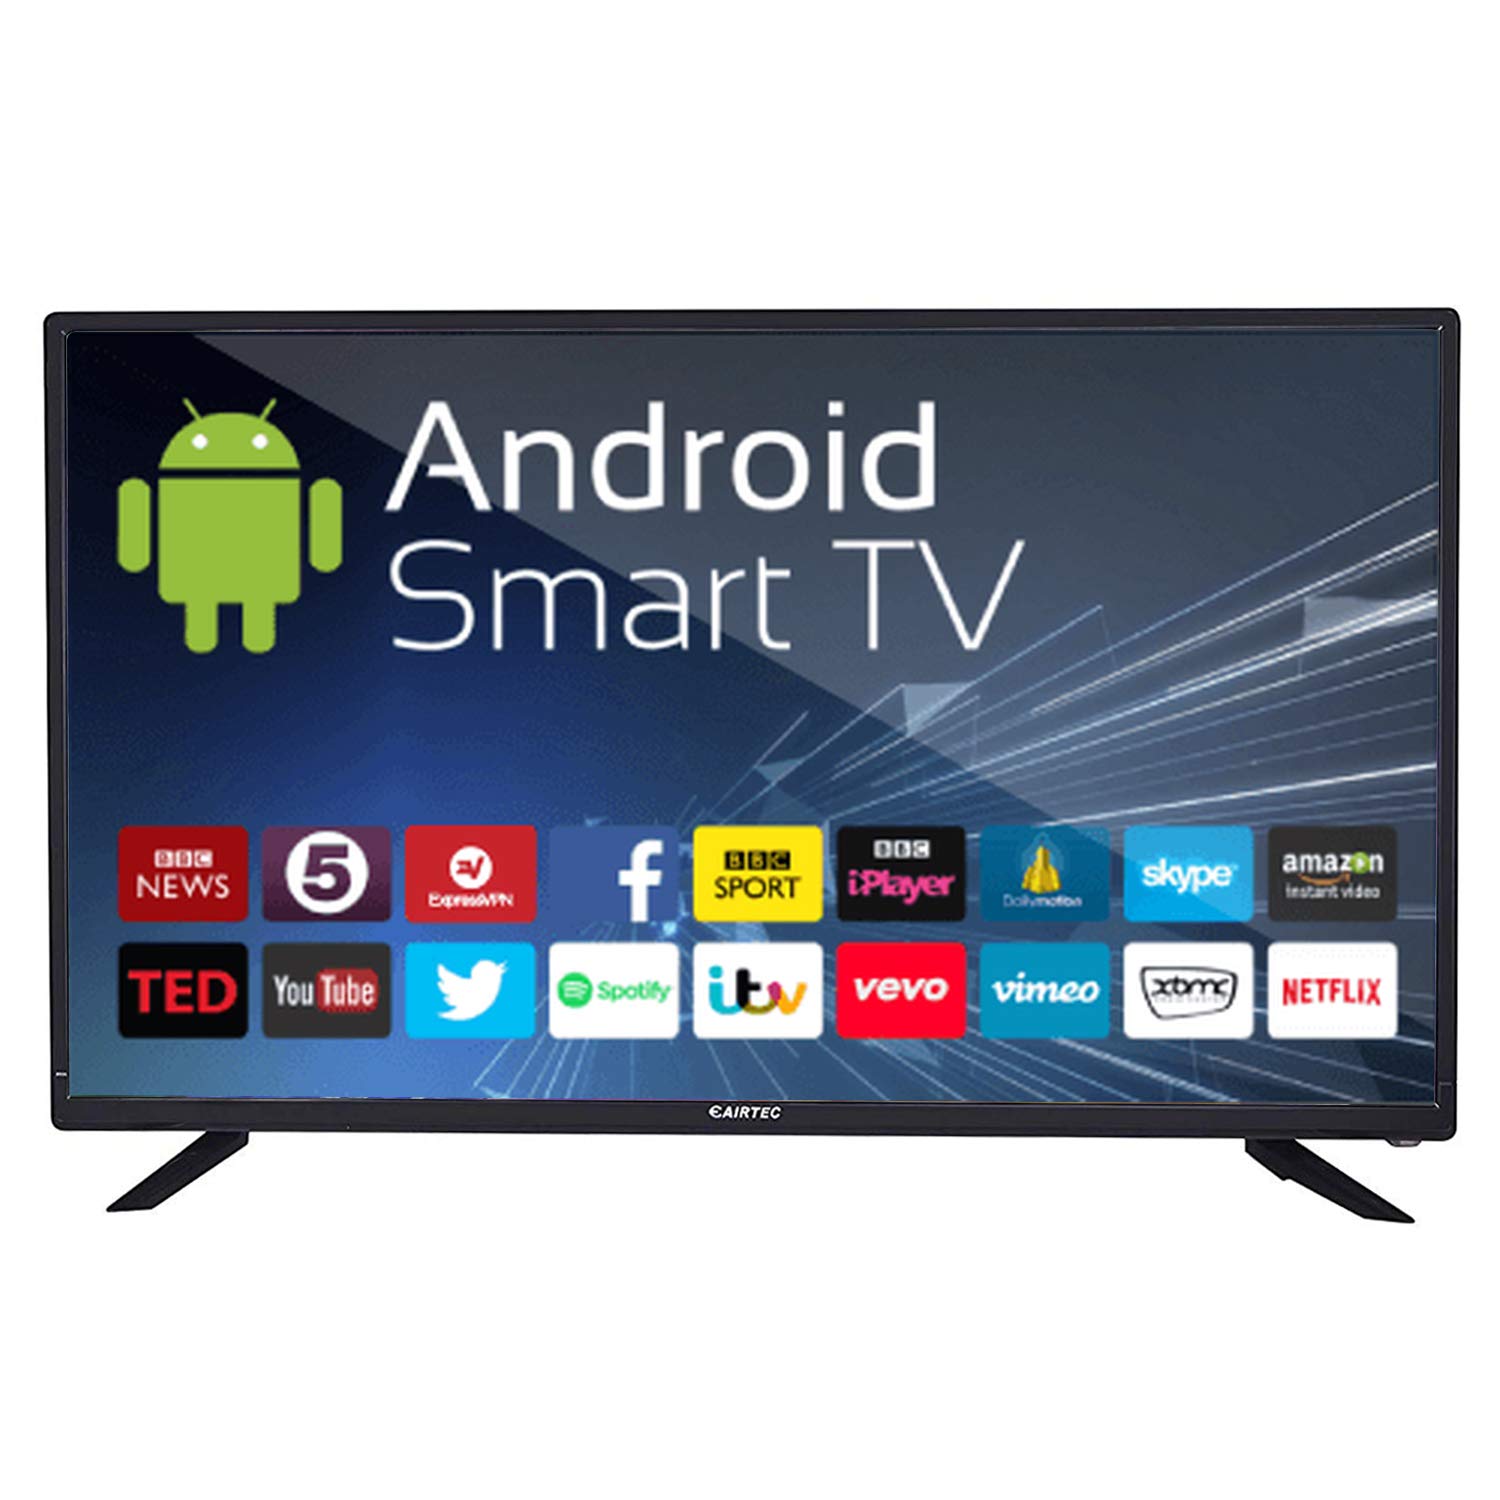 10 Best Smart TV Under 10000 in India 2020 (32 inch Smart LED TV)